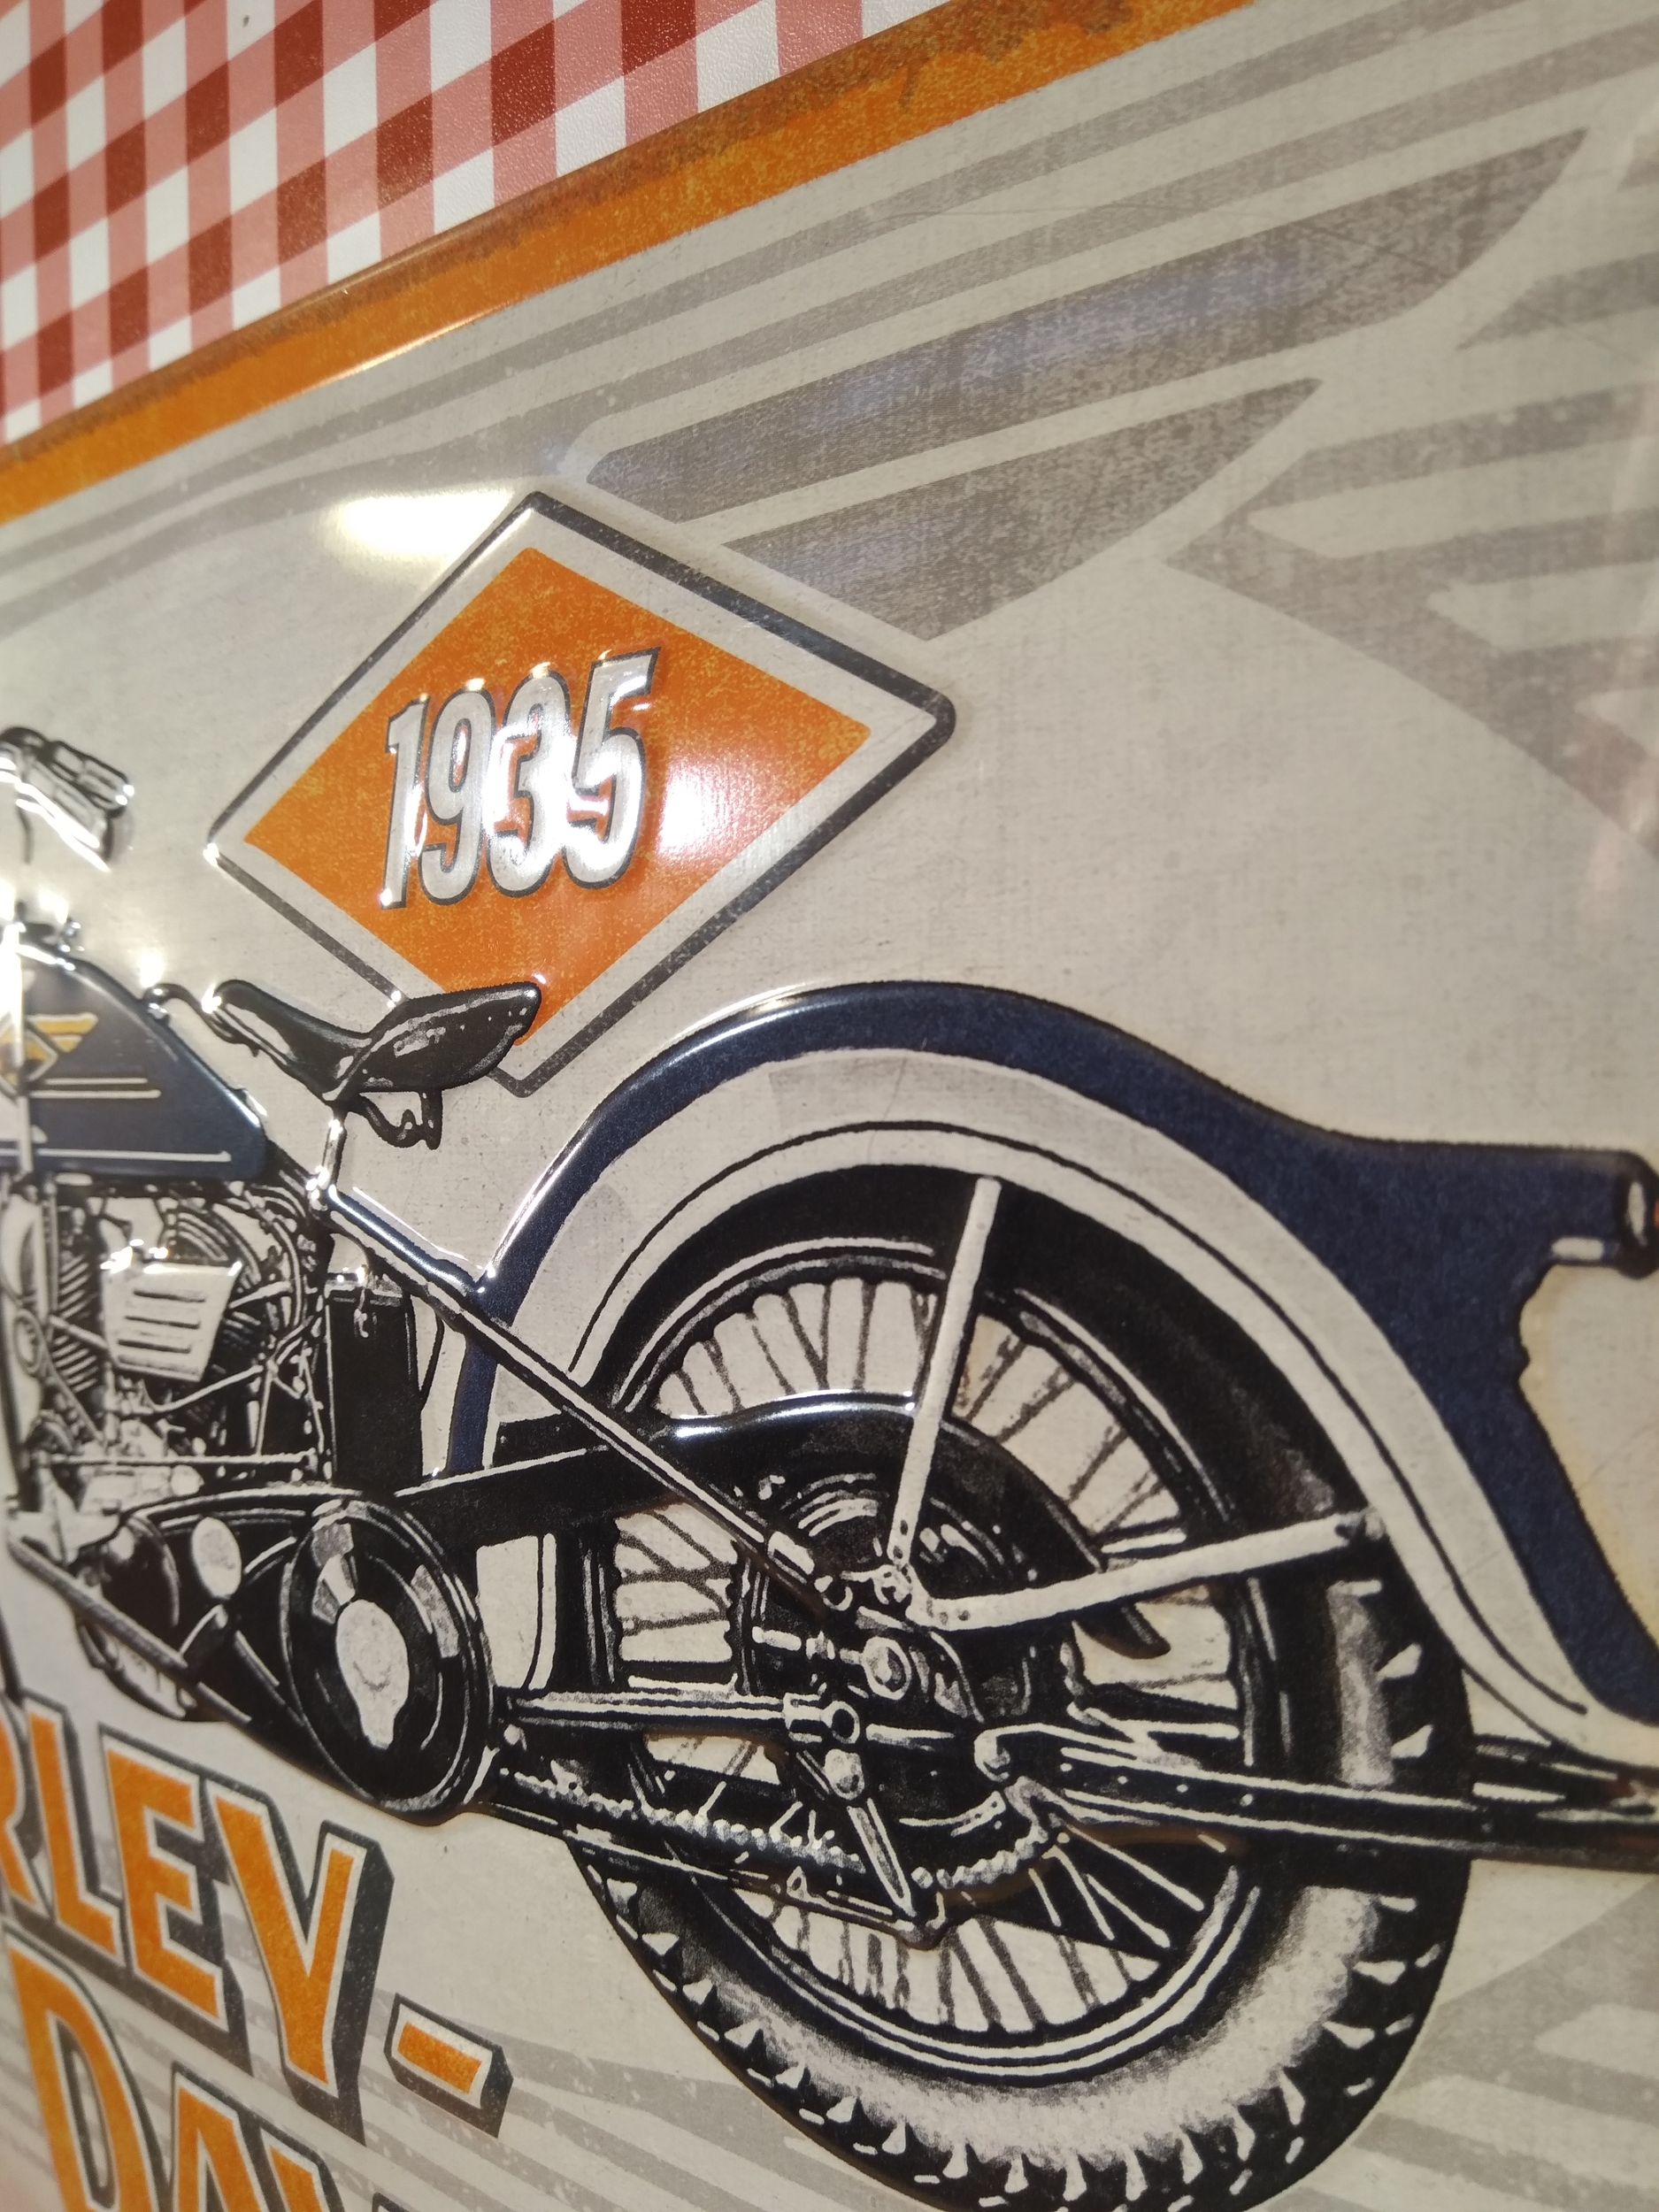 Plaque Vintage, Harley-Davidson – Motorcycles 1935 – Idée De